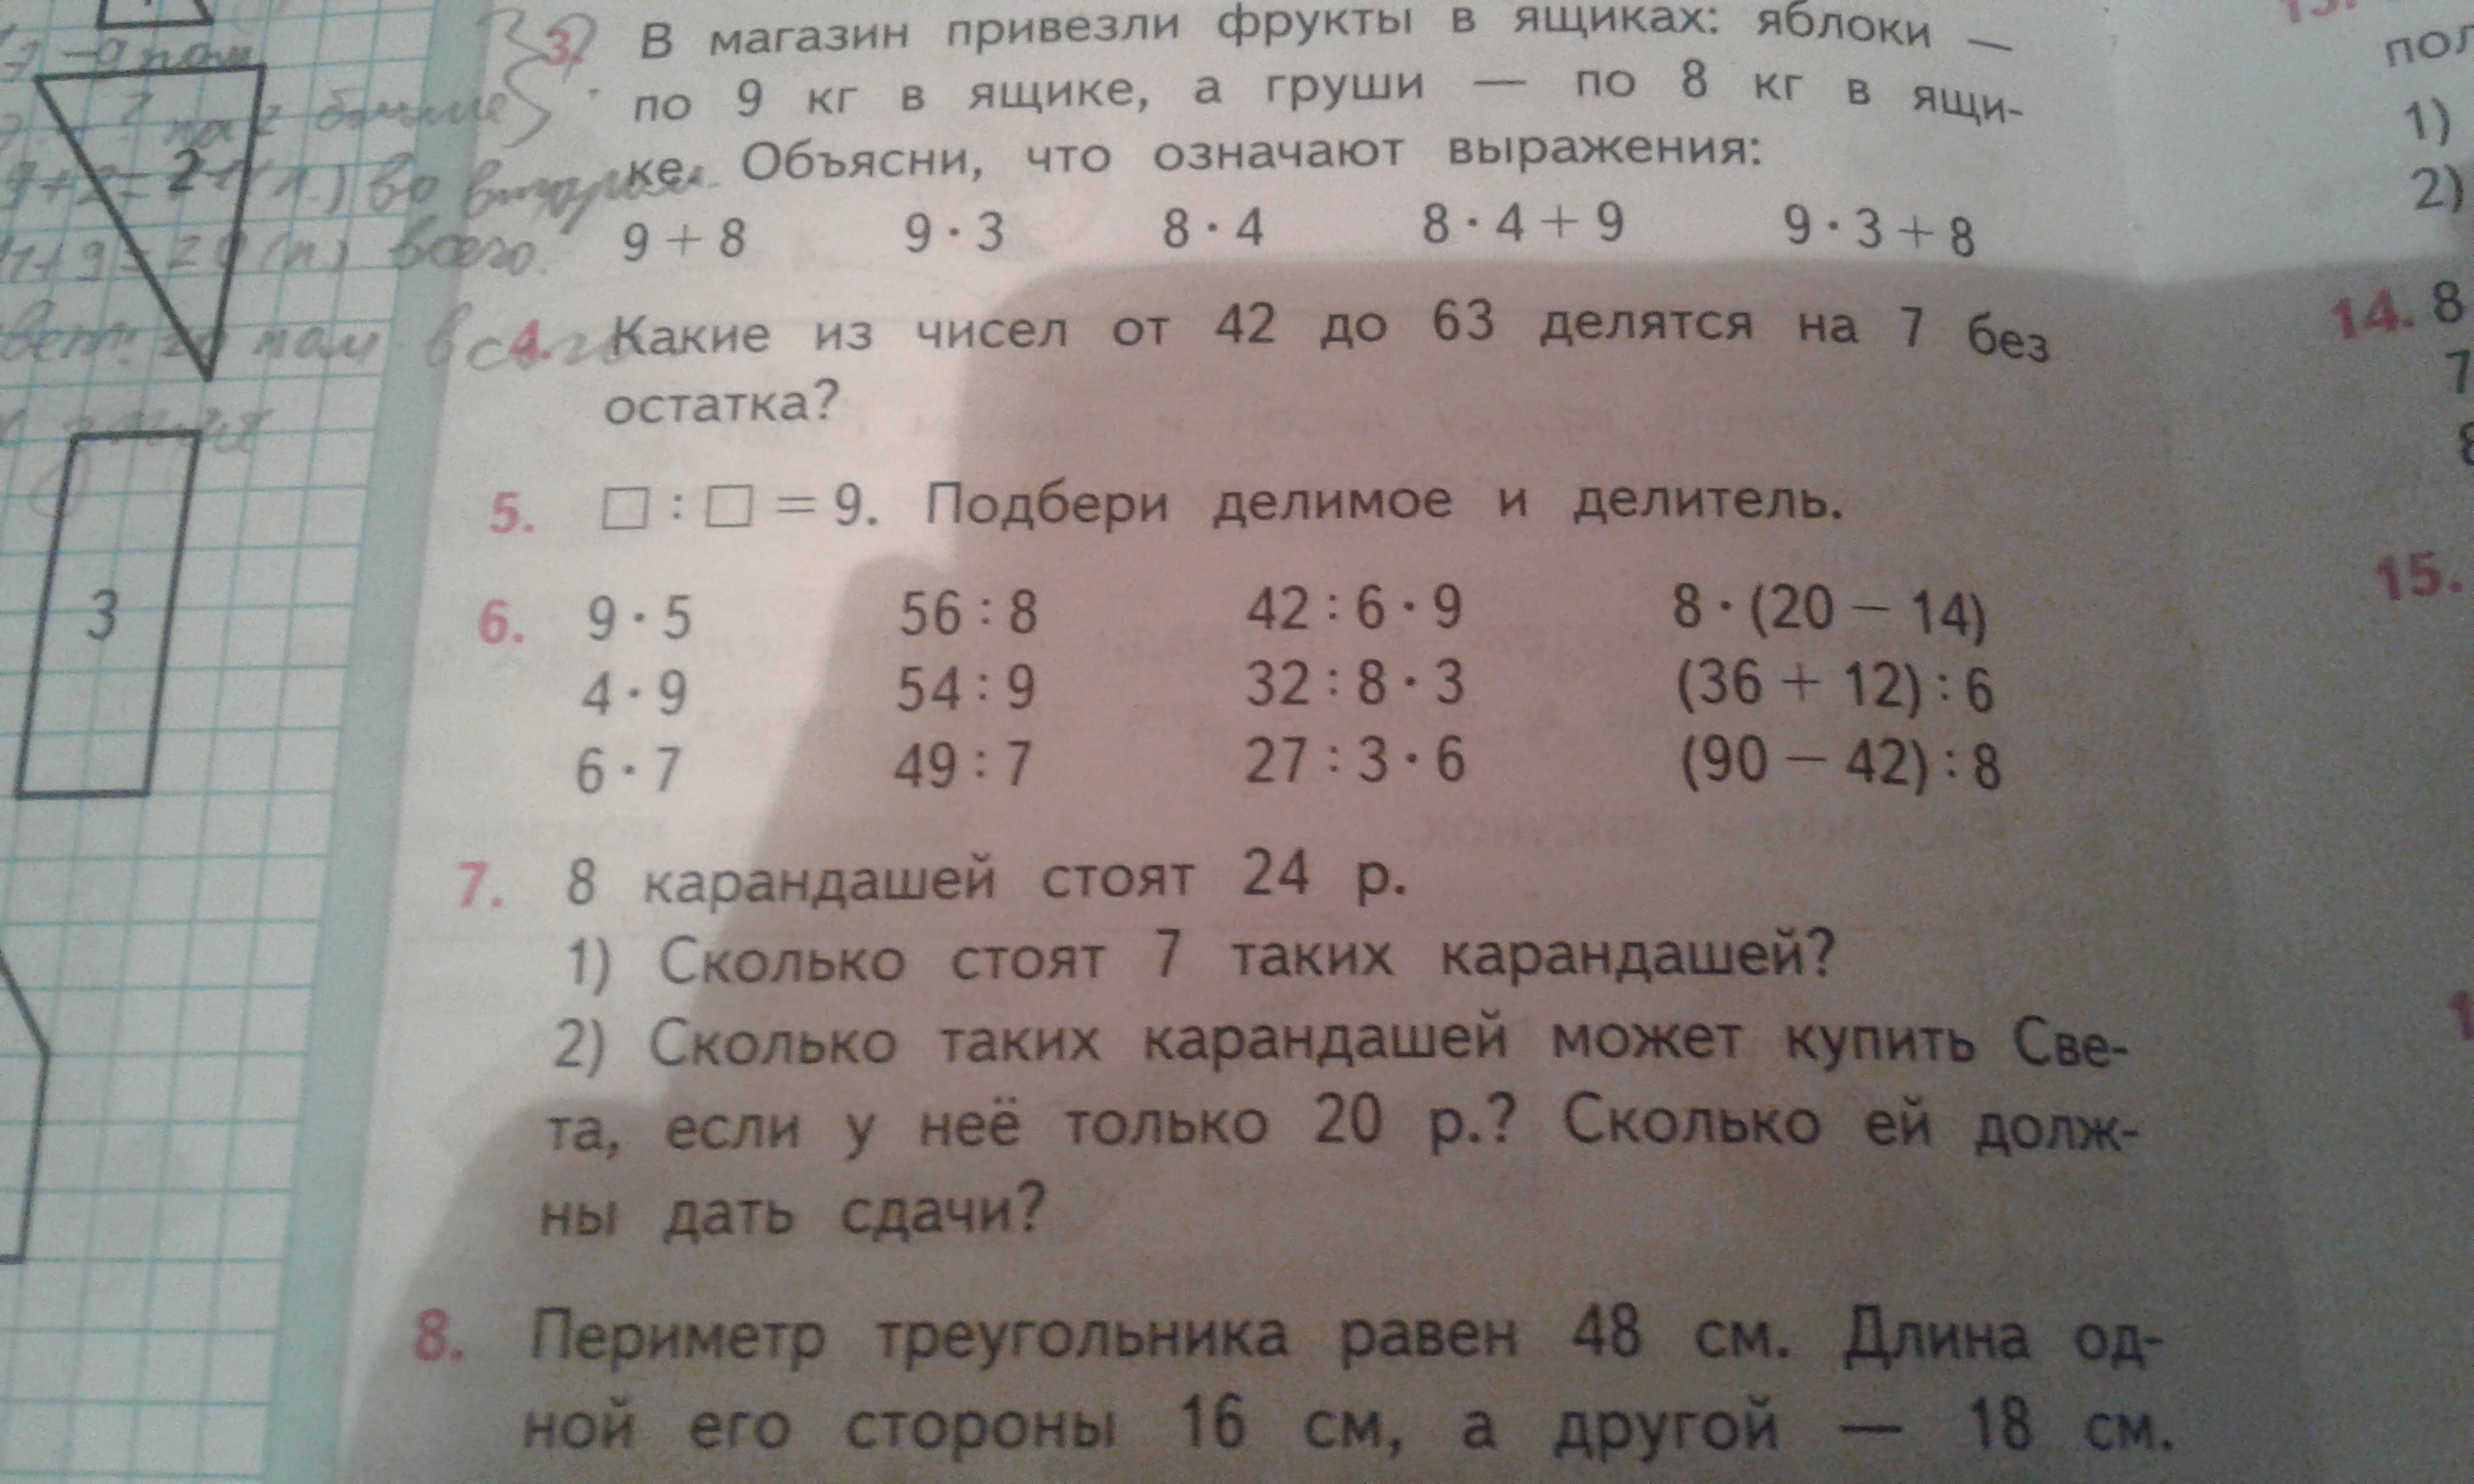 Математика третий класс страница 67 номер 7. Математика 3 класс 1 часть учебник стр 76 номер 7. Математика 3 класс 1 часть стр 76 номер 2.